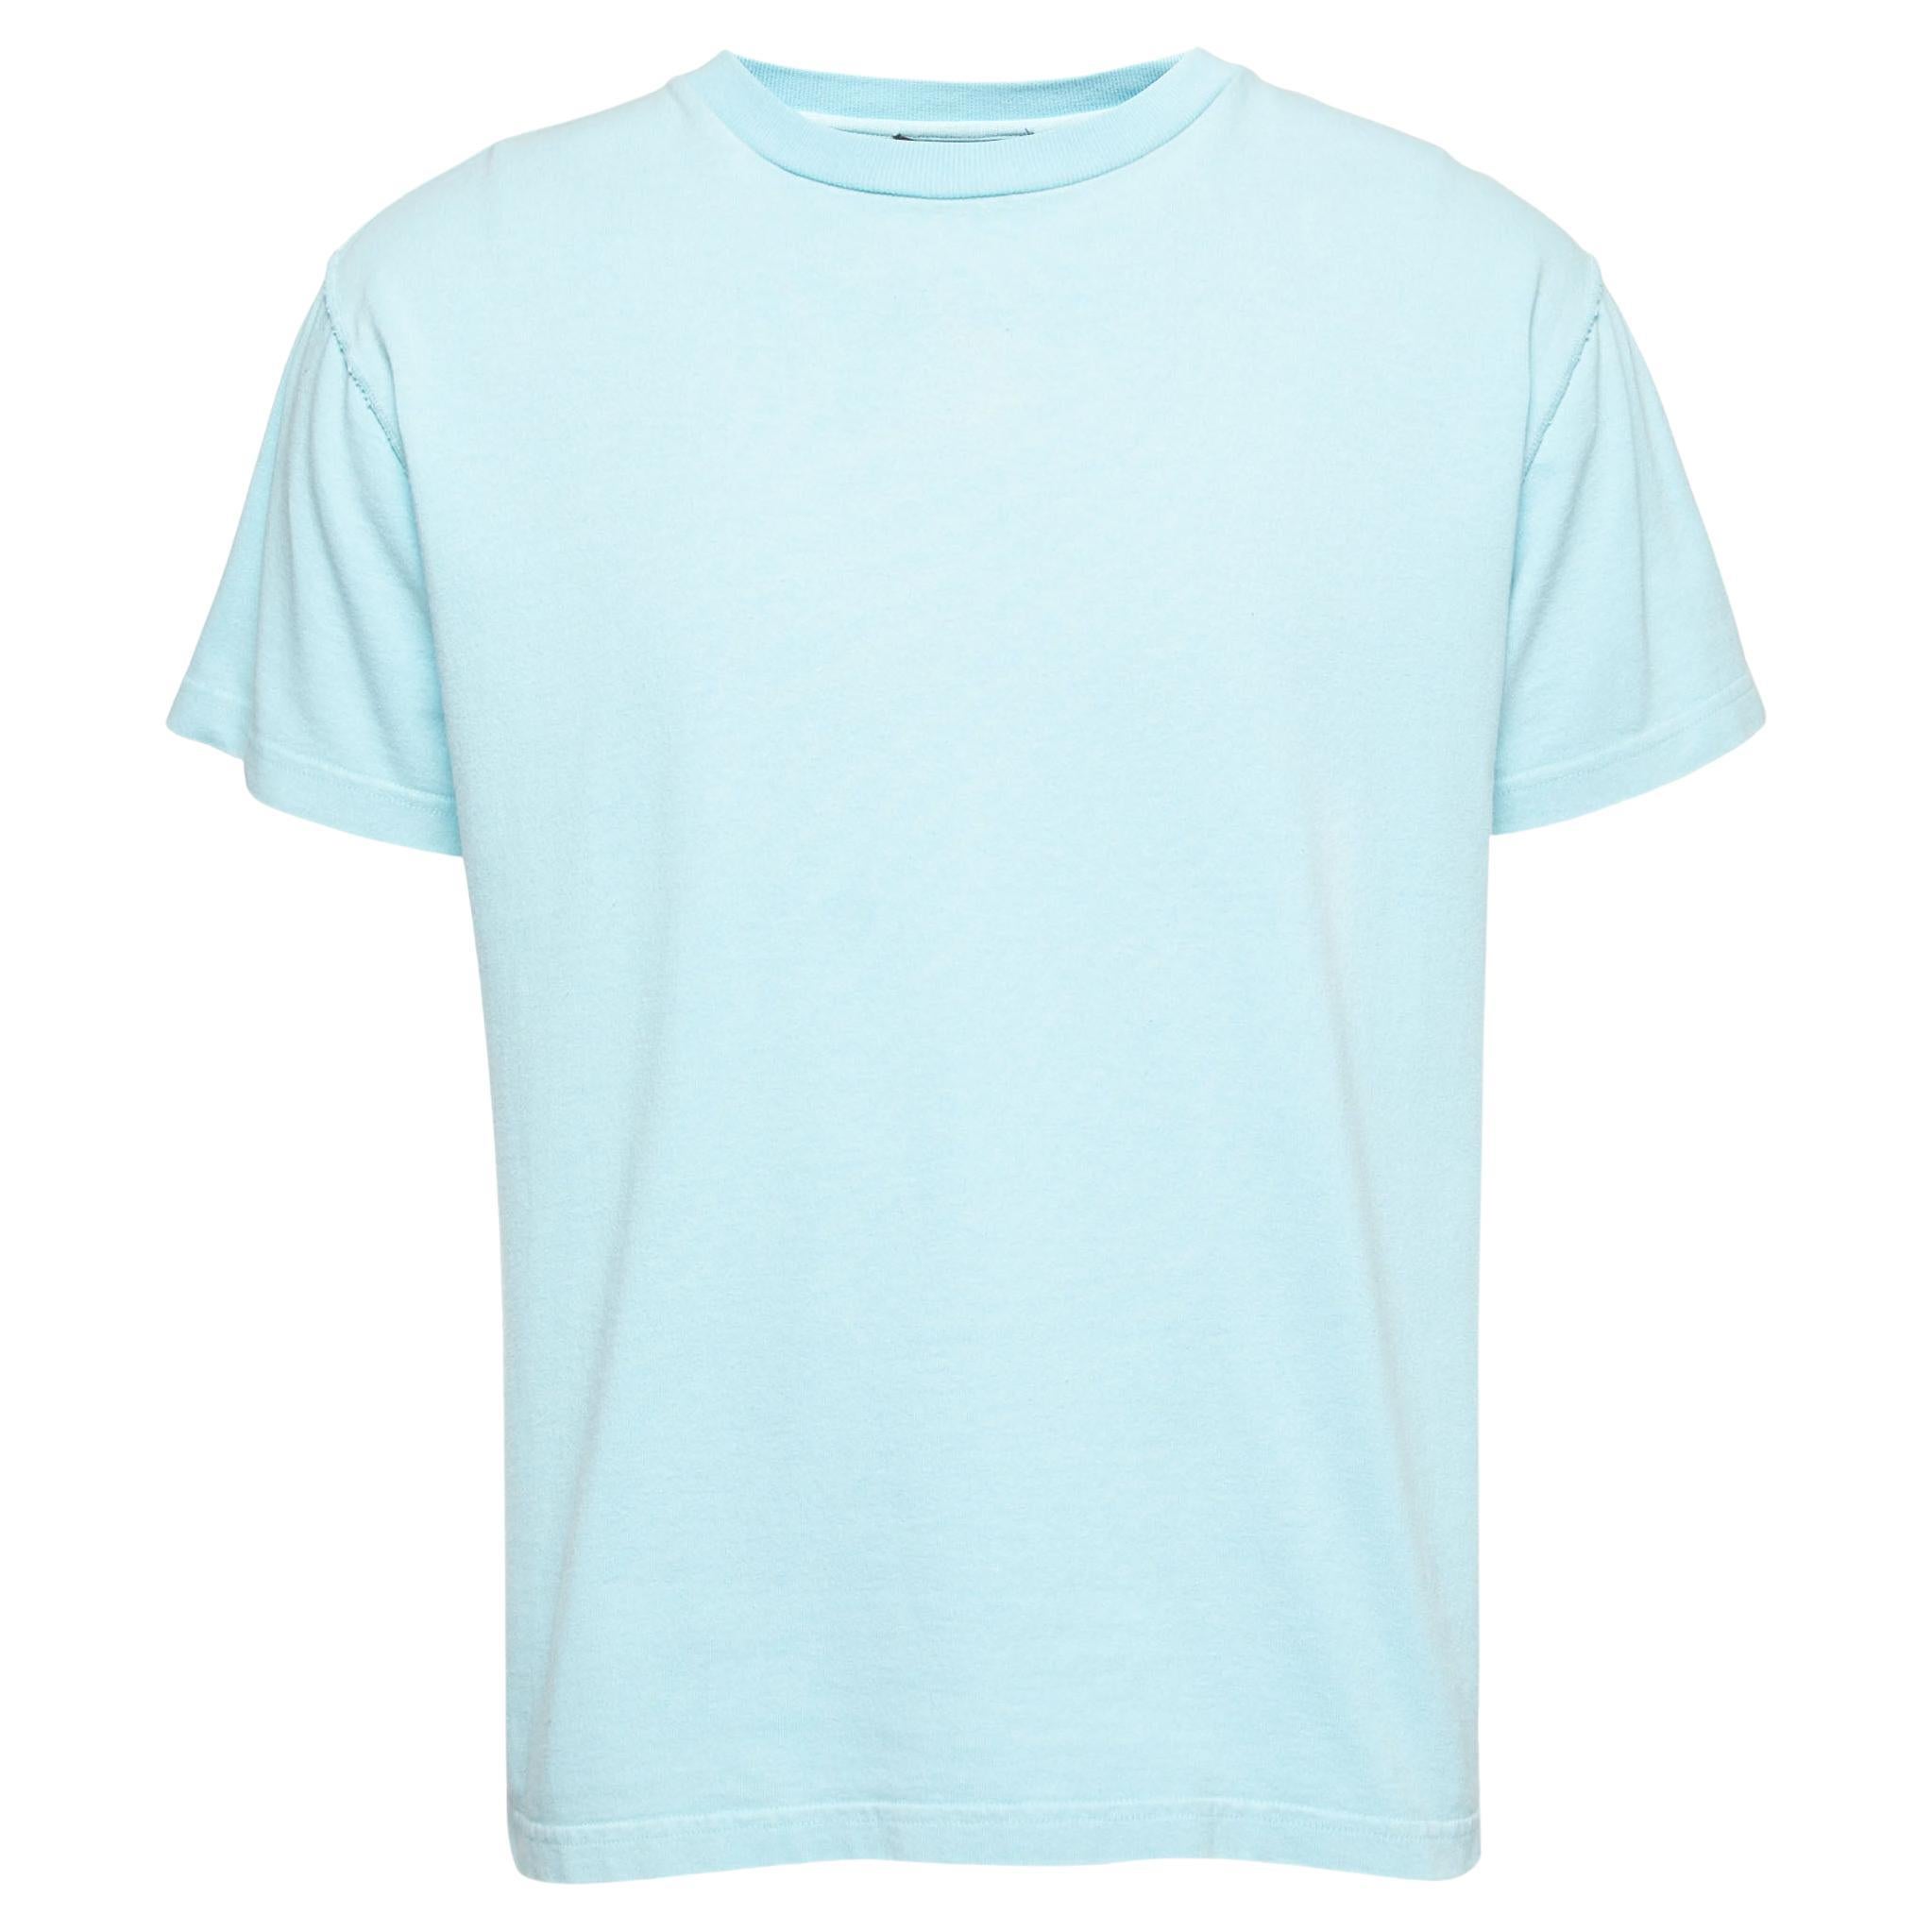 blue lv t shirt